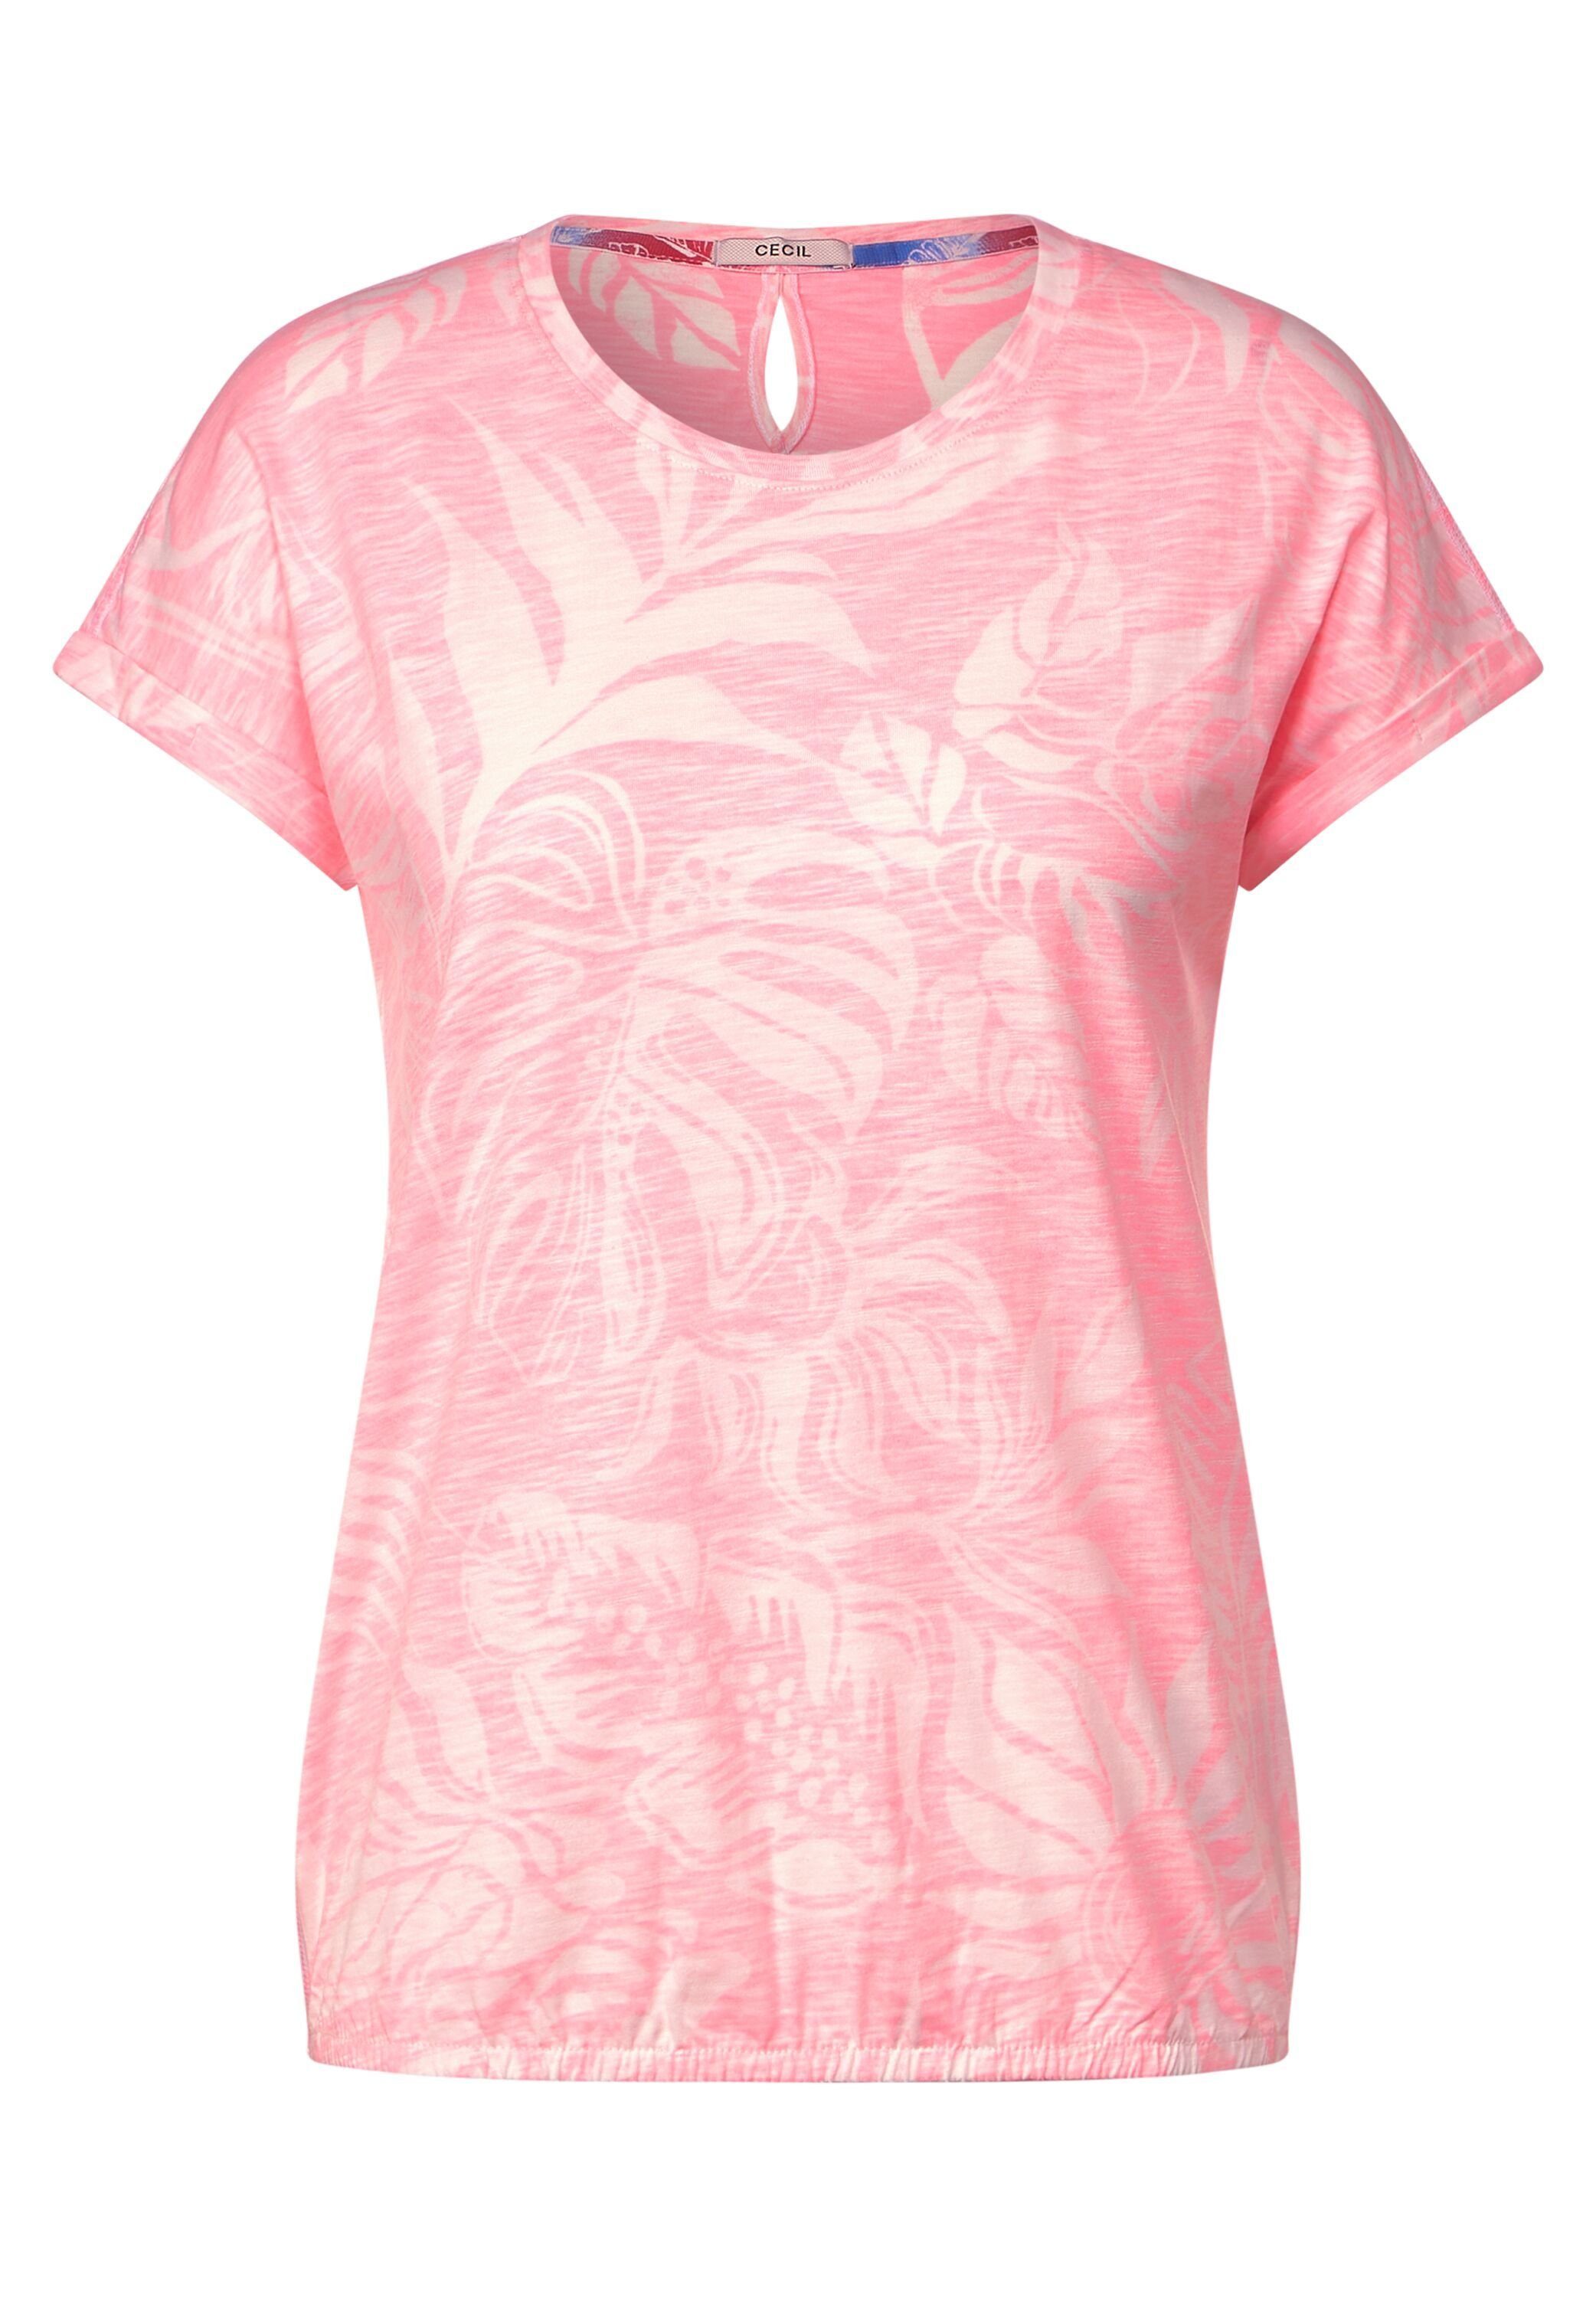 Cecil T-Shirt soft pink | T-Shirts